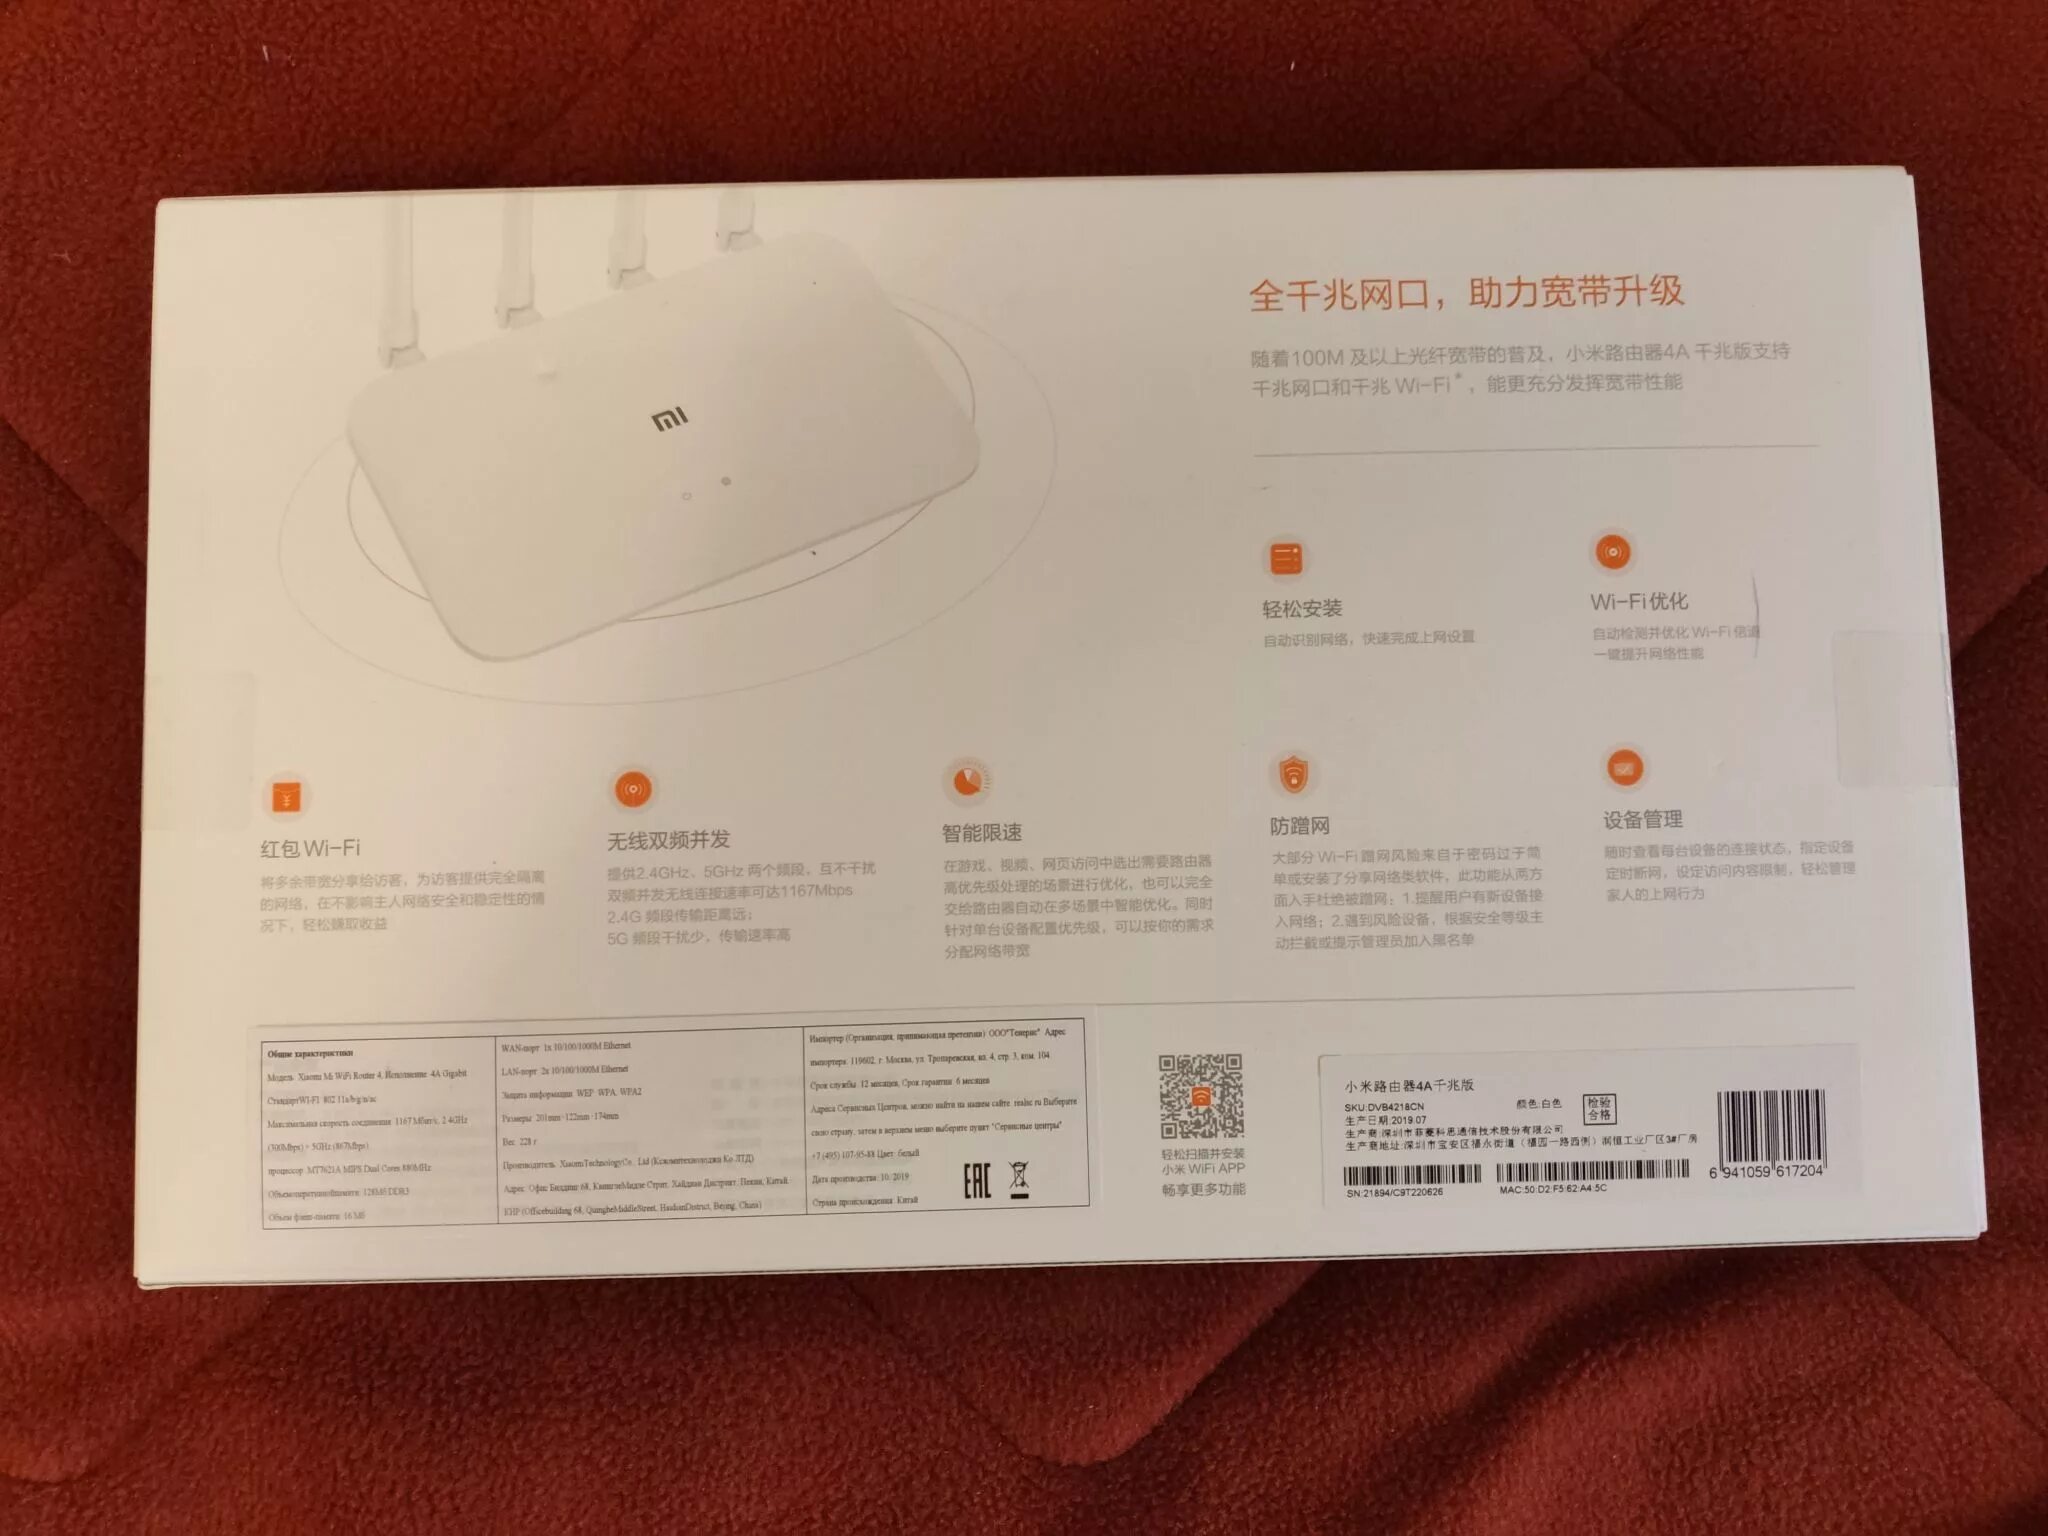 Xiaomi wifi router 4a gigabit edition. Wi-Fi роутер 4a Gigabit Edition. Xiaomi 4a роутер. Роутер Xiaomi 4a Gigabit. Xiaomi mi WIFI Router 4a Gigabit Edition.